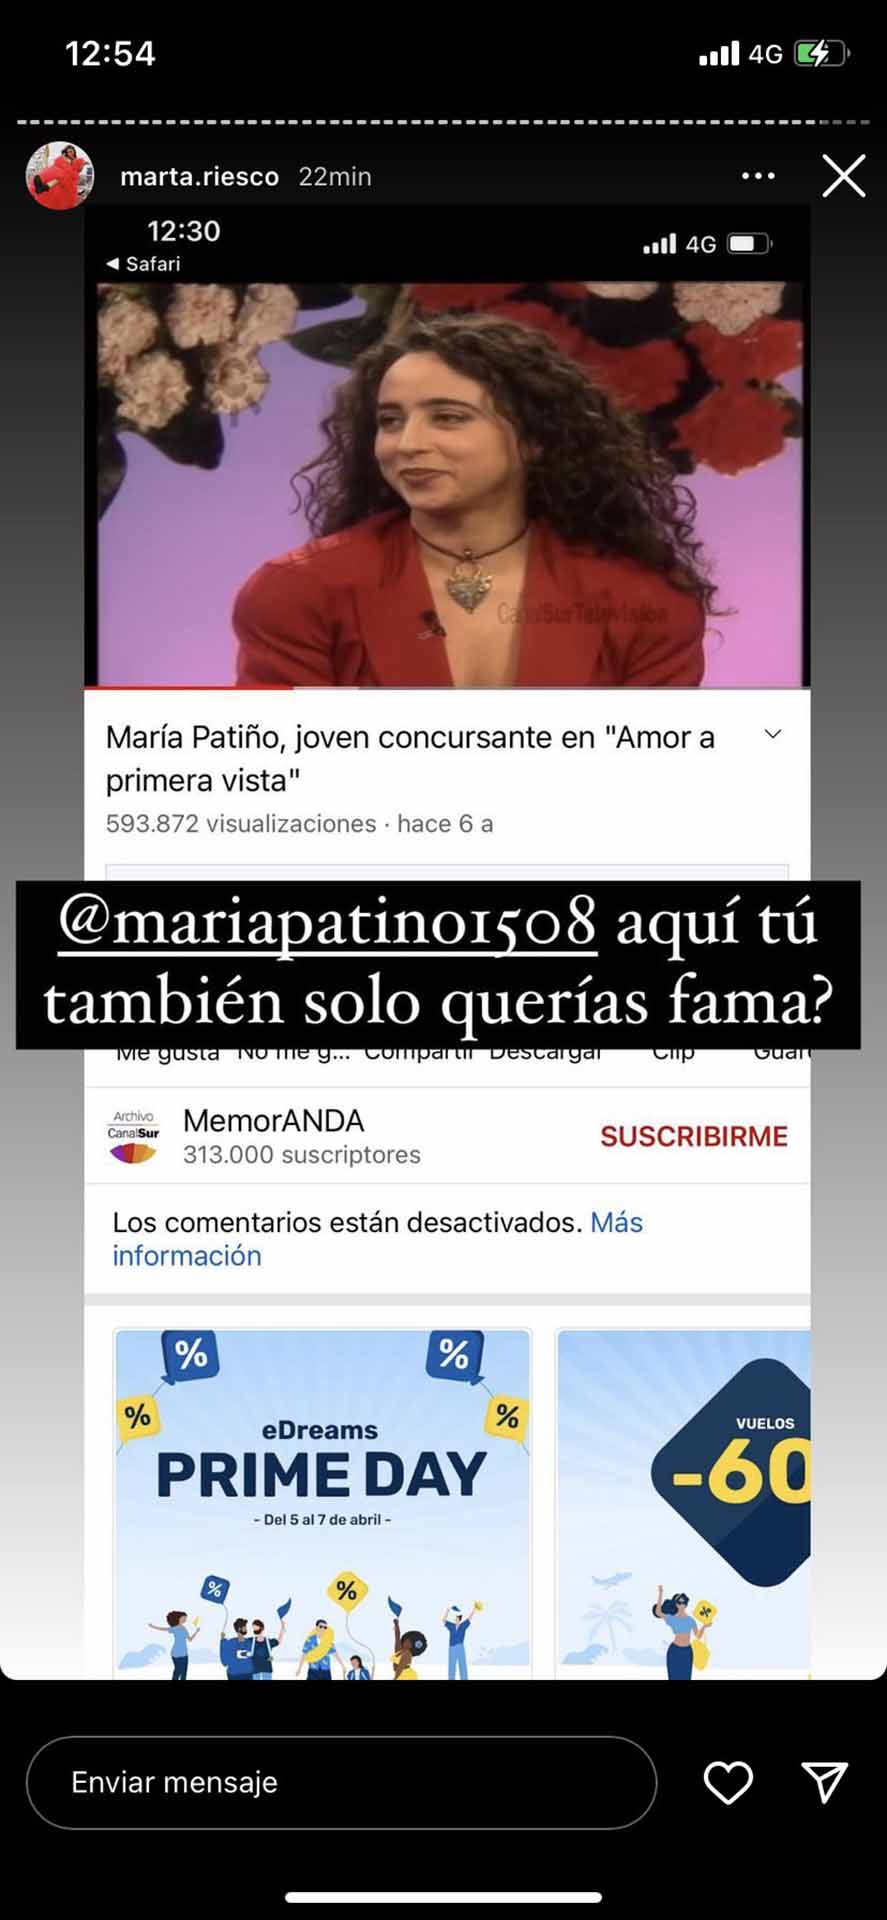 María Patiño Marta Riesco 4